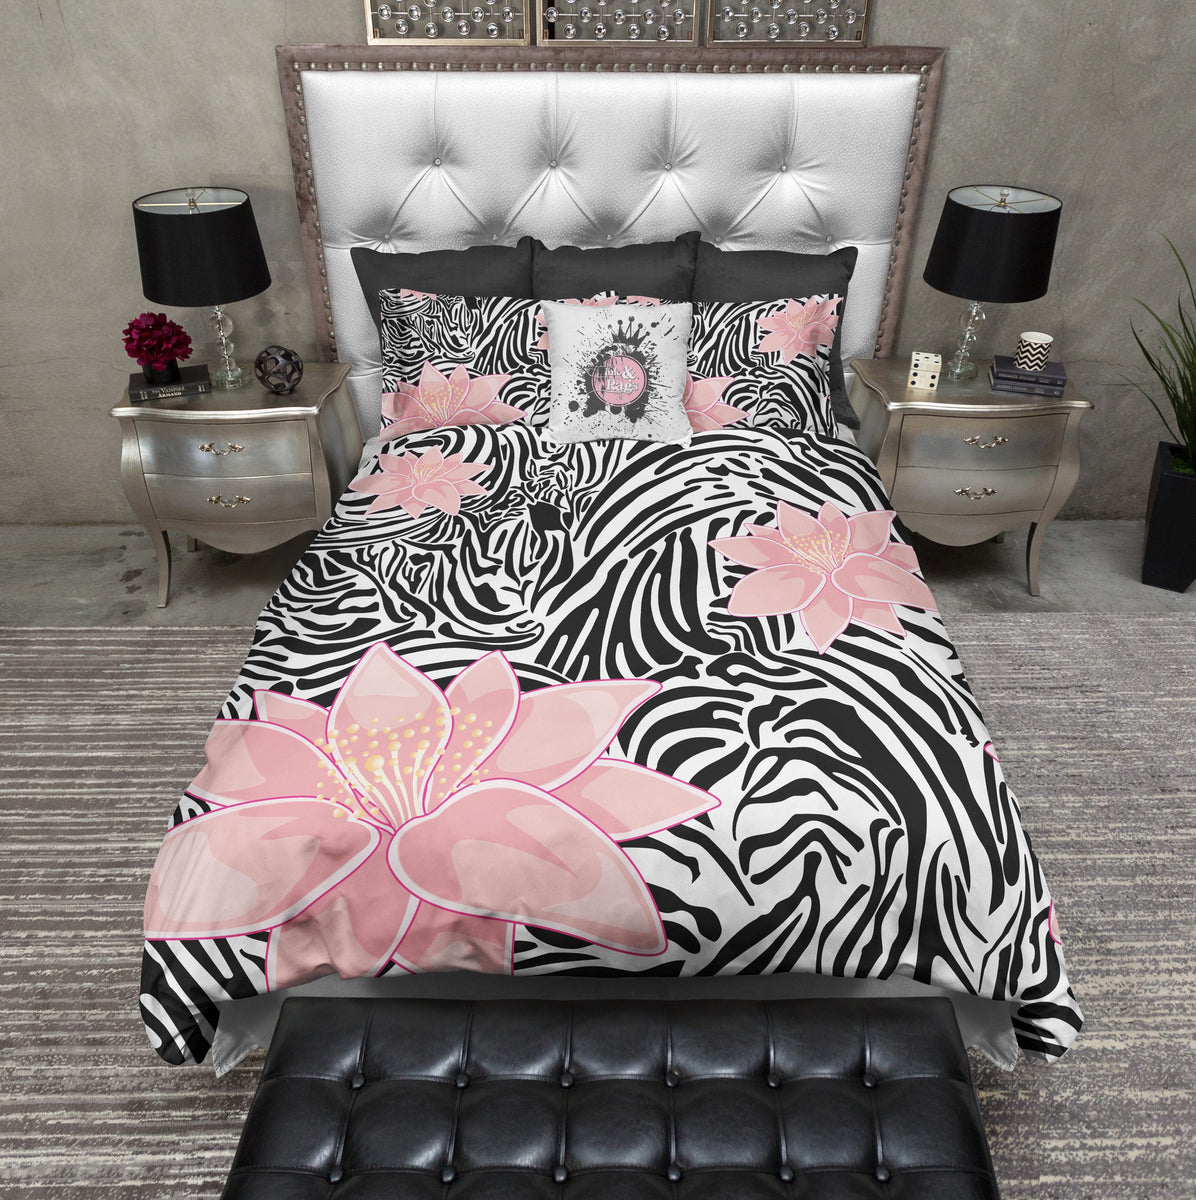 pink and white zebra print bedding